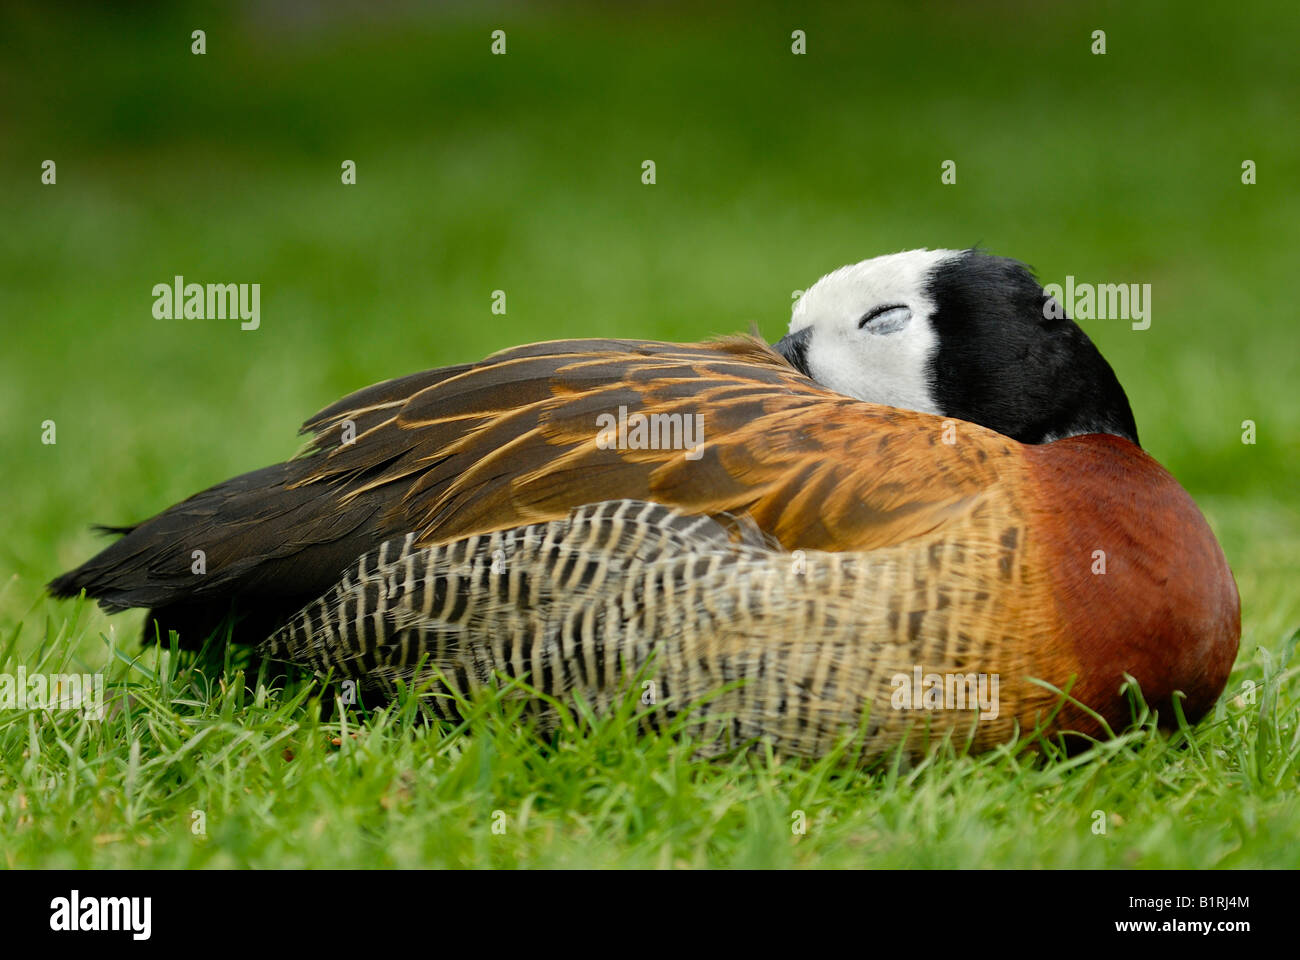 Sleeping duck Stock Photo